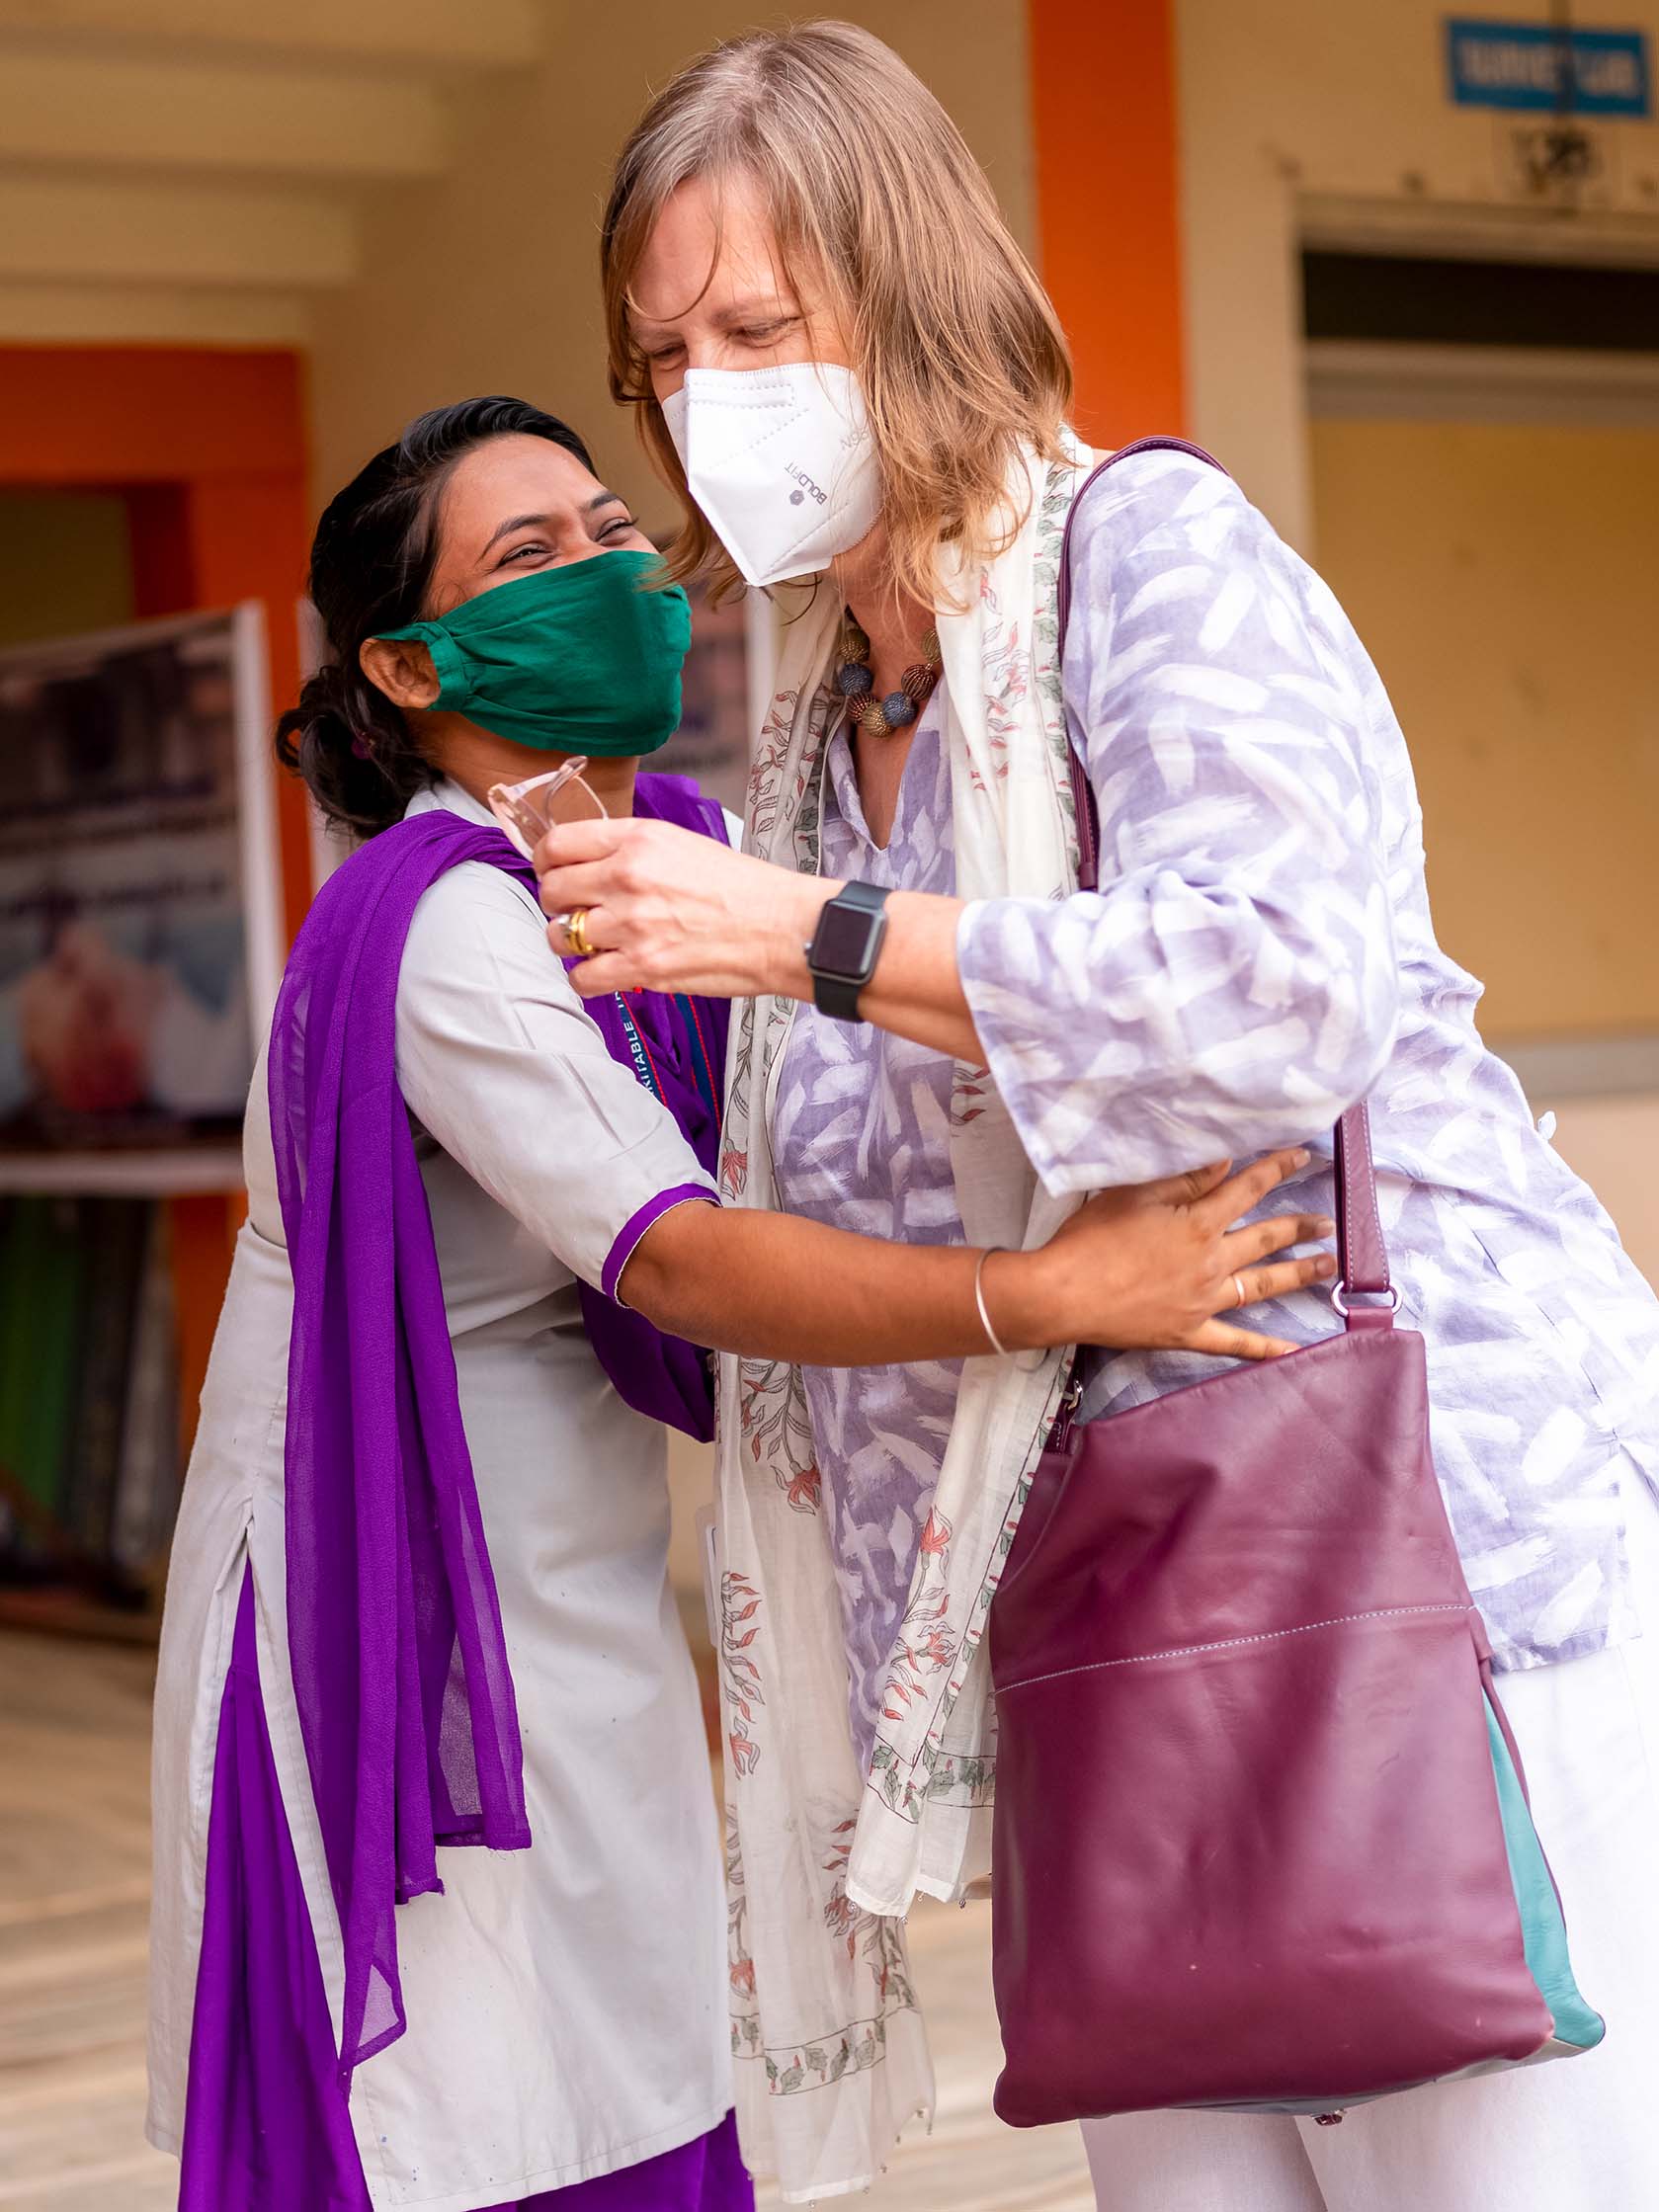 Photo: UN Women Country Representative in India, Susan Ferguson, embraces Tapaswini Barik, who is learning new skills through UN Women’s Second Chance Education Programme. Photo: UN Women/Prashanth Vishwanathan